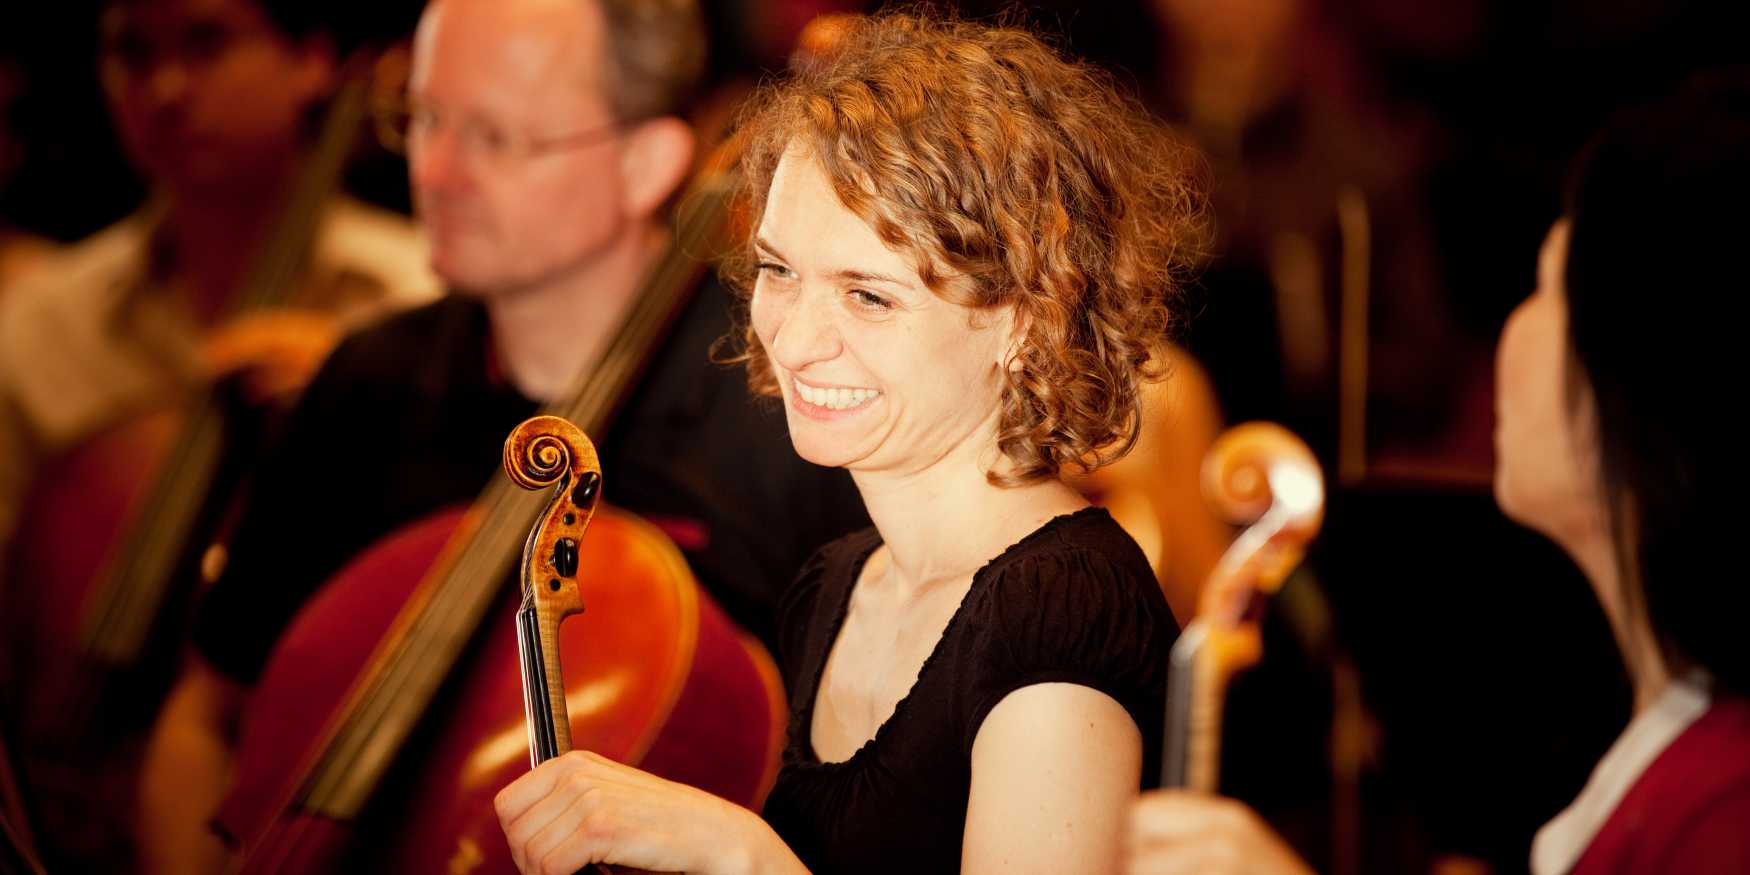 Marianna Oczkowska Portrait, 2. Violinistin